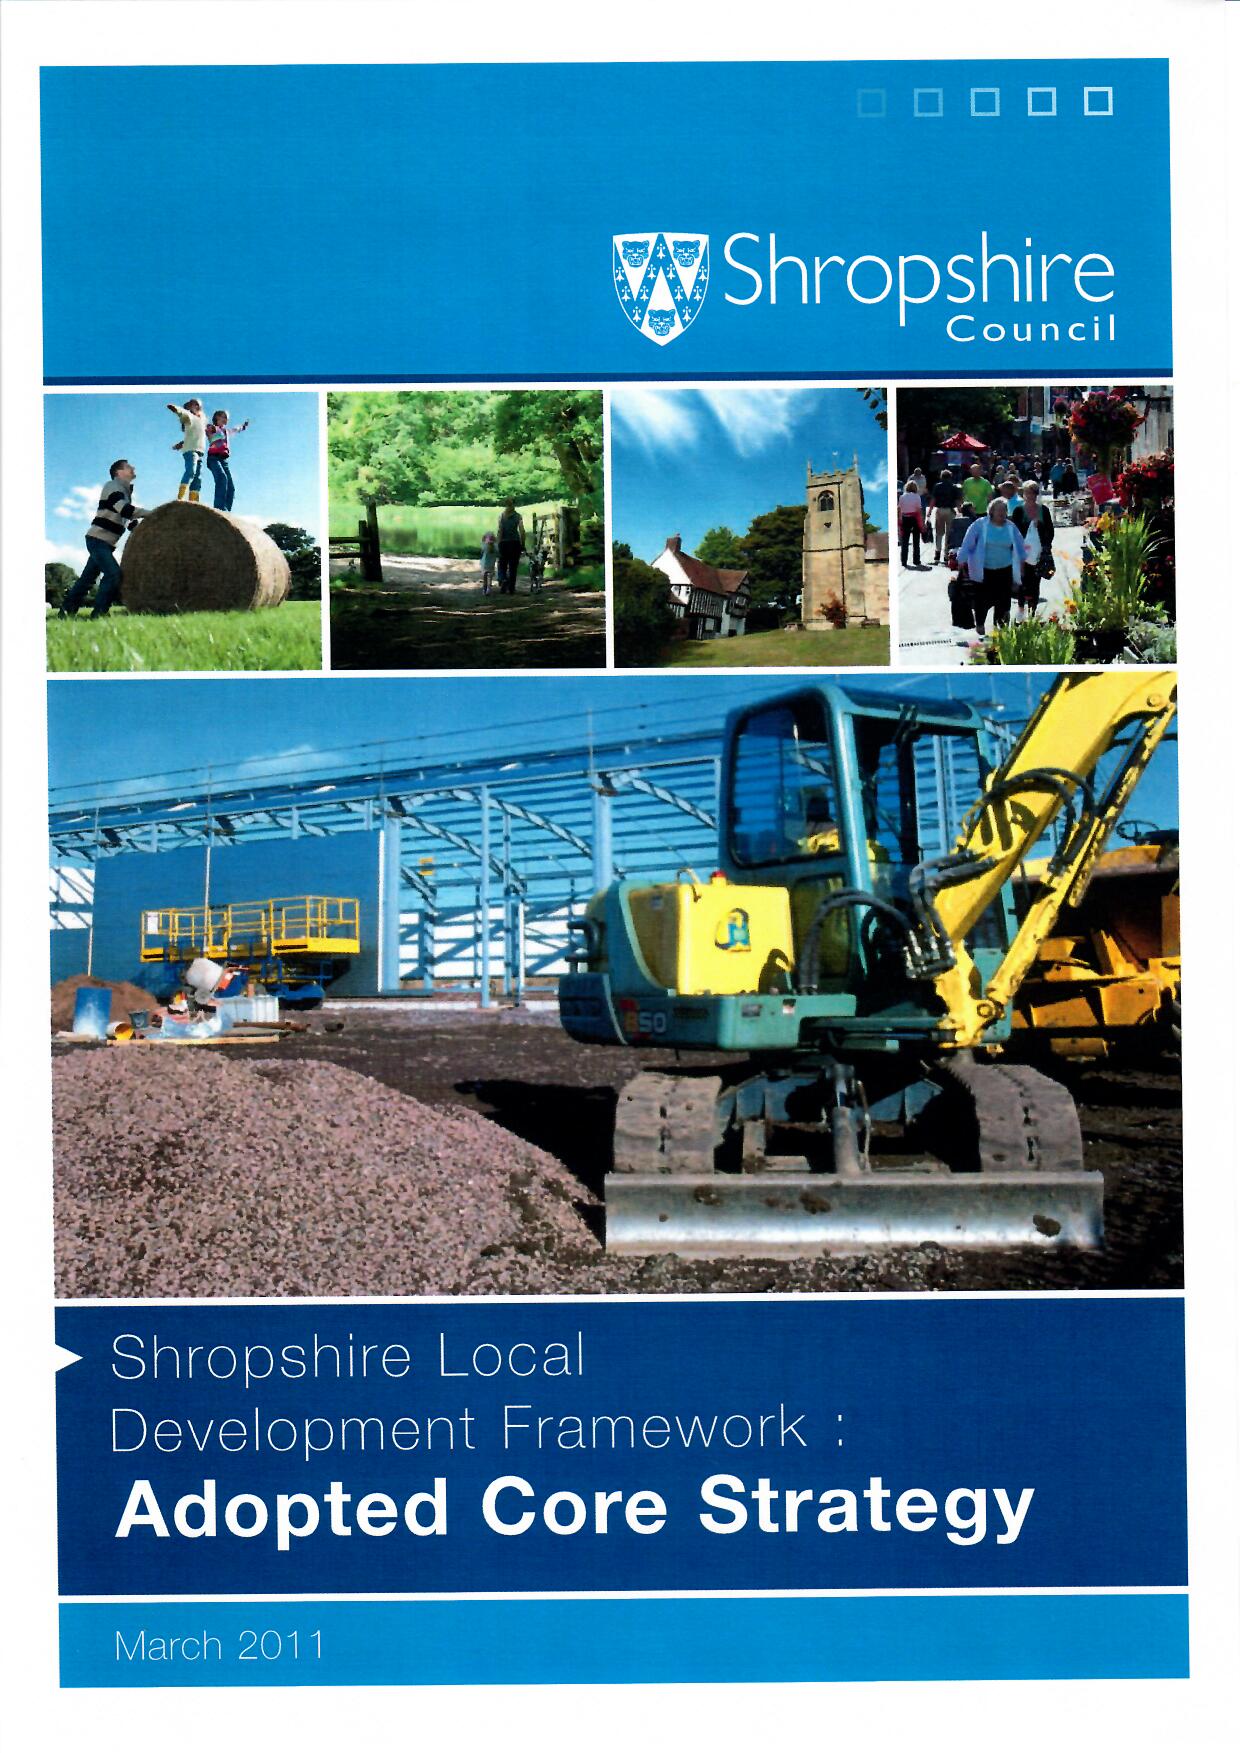 Shropshire Council's Core Strategy